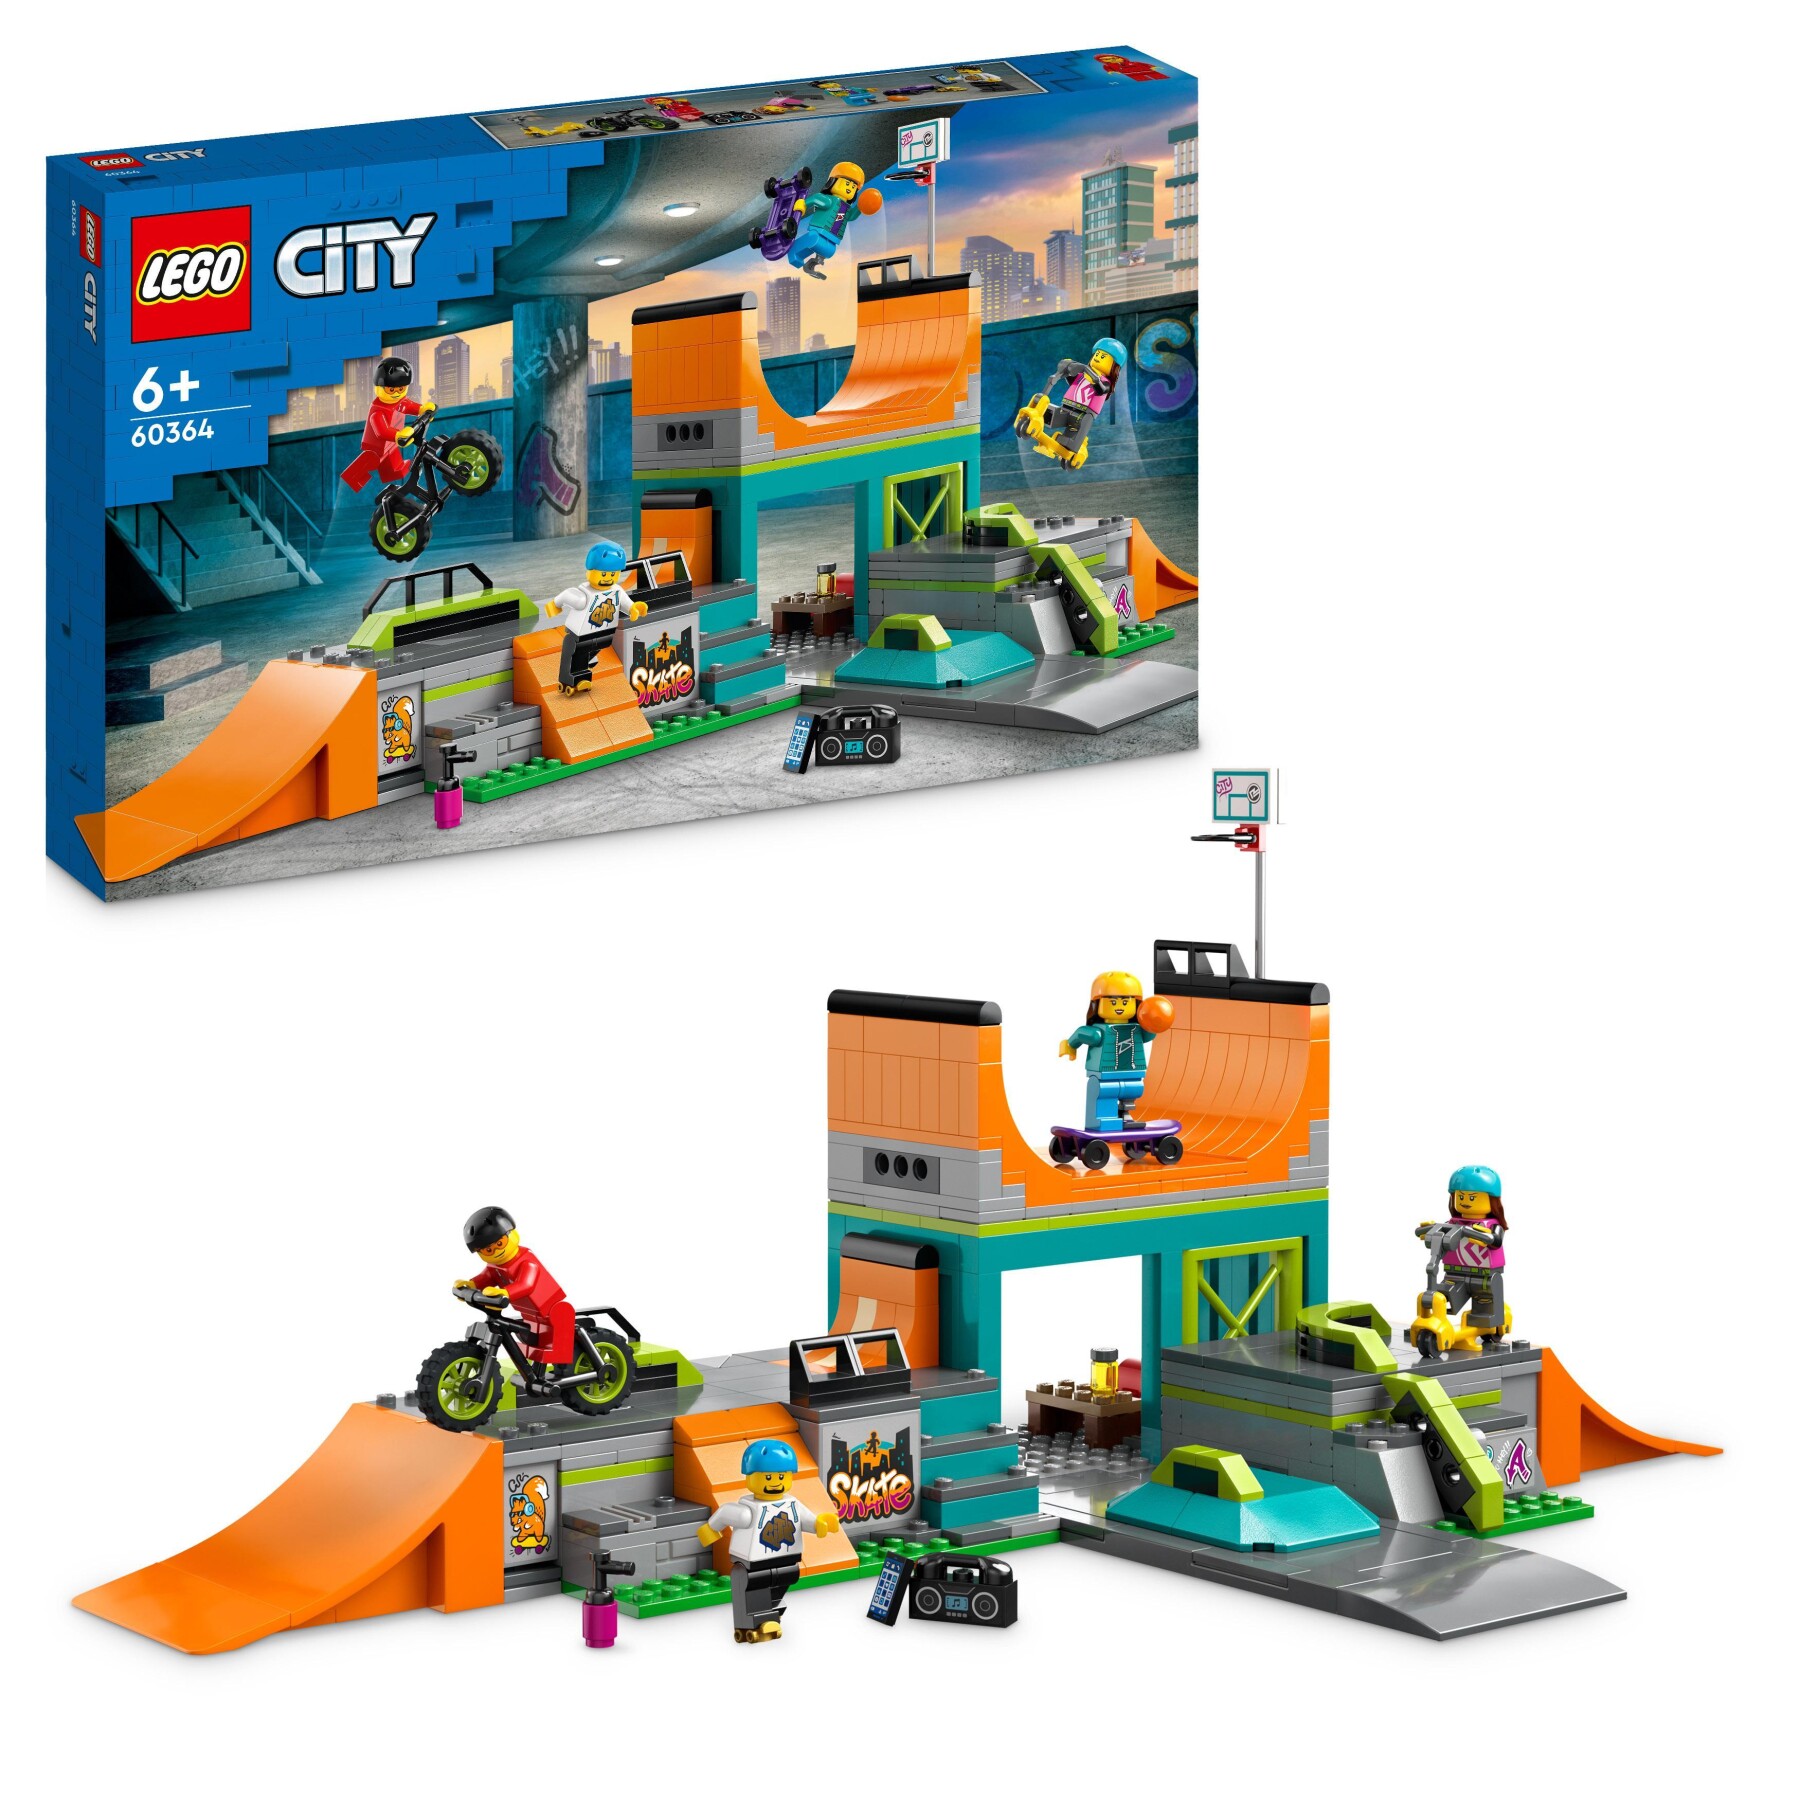 Lego city 60364 skate park urbano, gioco per bambini 6+ con bmx, skateboard, monopattino, rollerblade e 4 minifigure, set 2023 - LEGO CITY